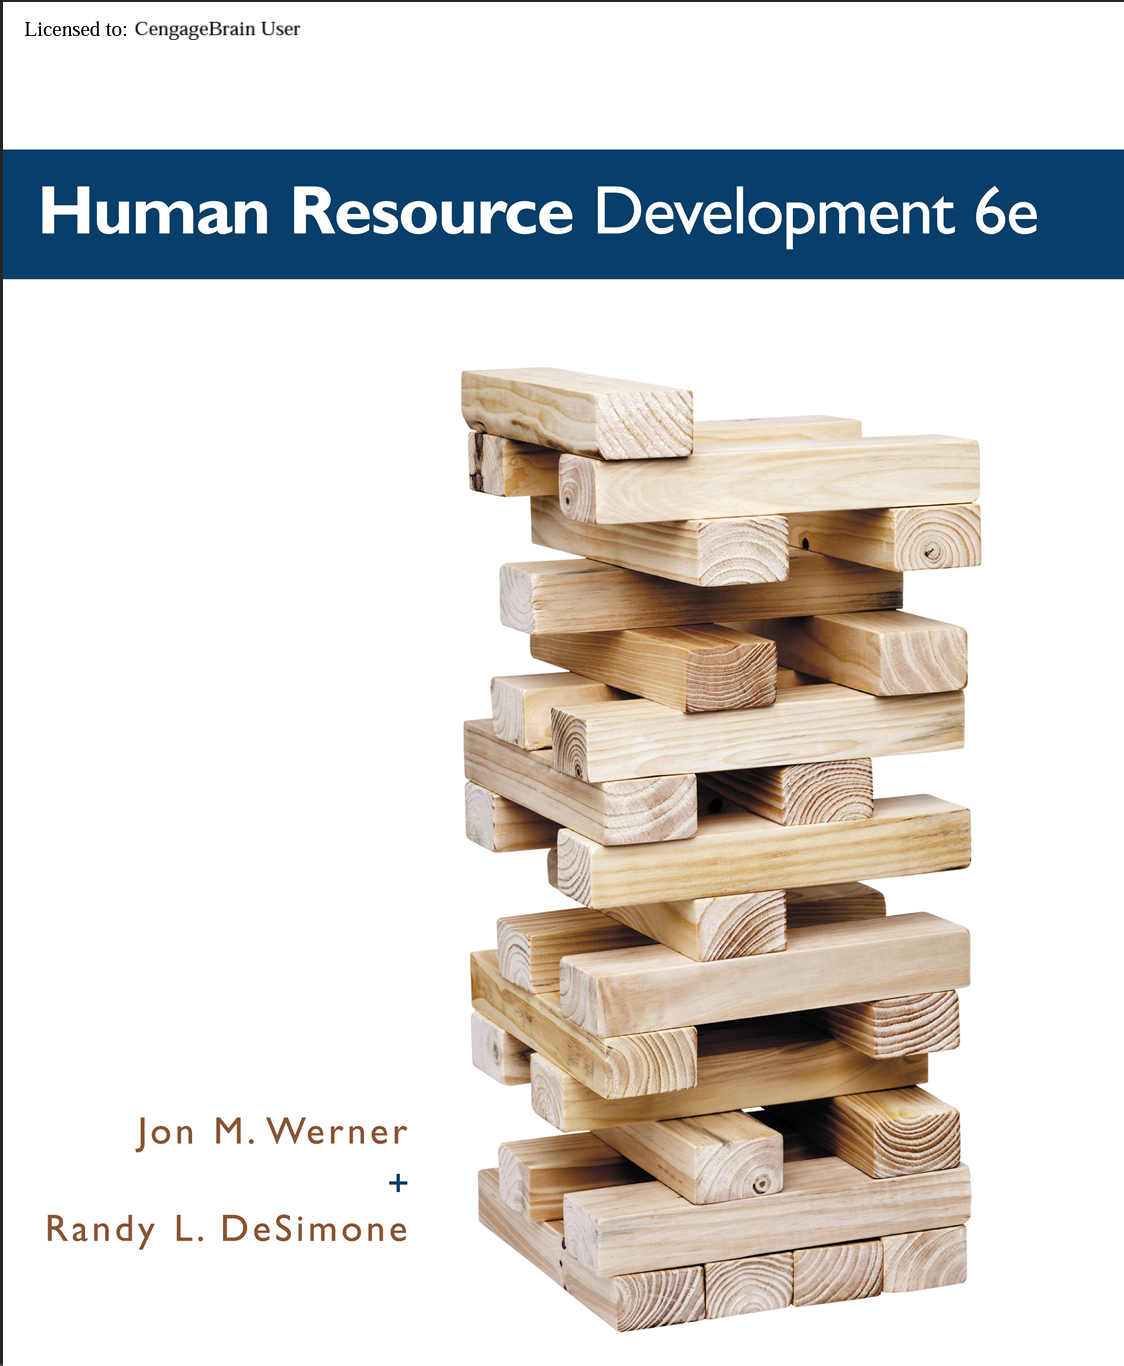 H.R.D. - Human Resource Development